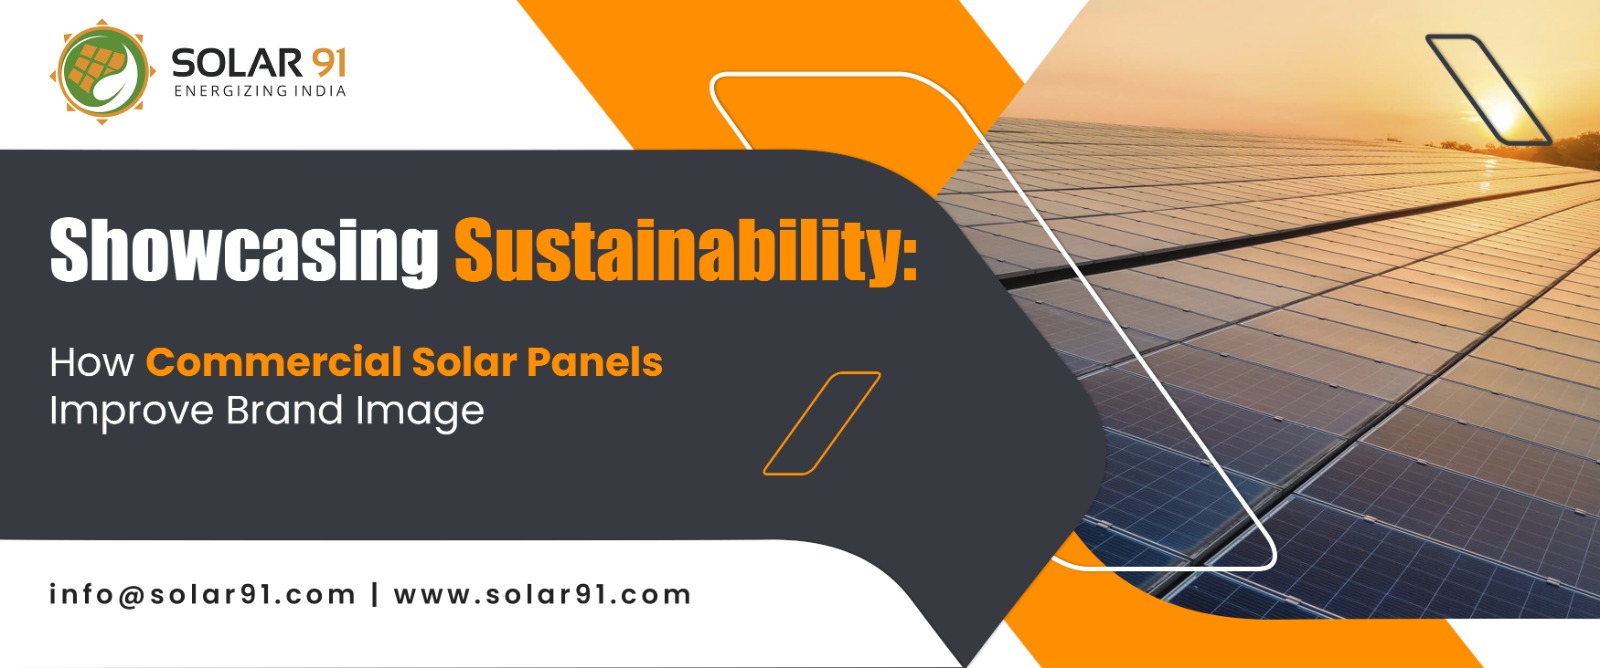 Showcasing Sustainability: How Commercial Solar Panels Improve Brand Image